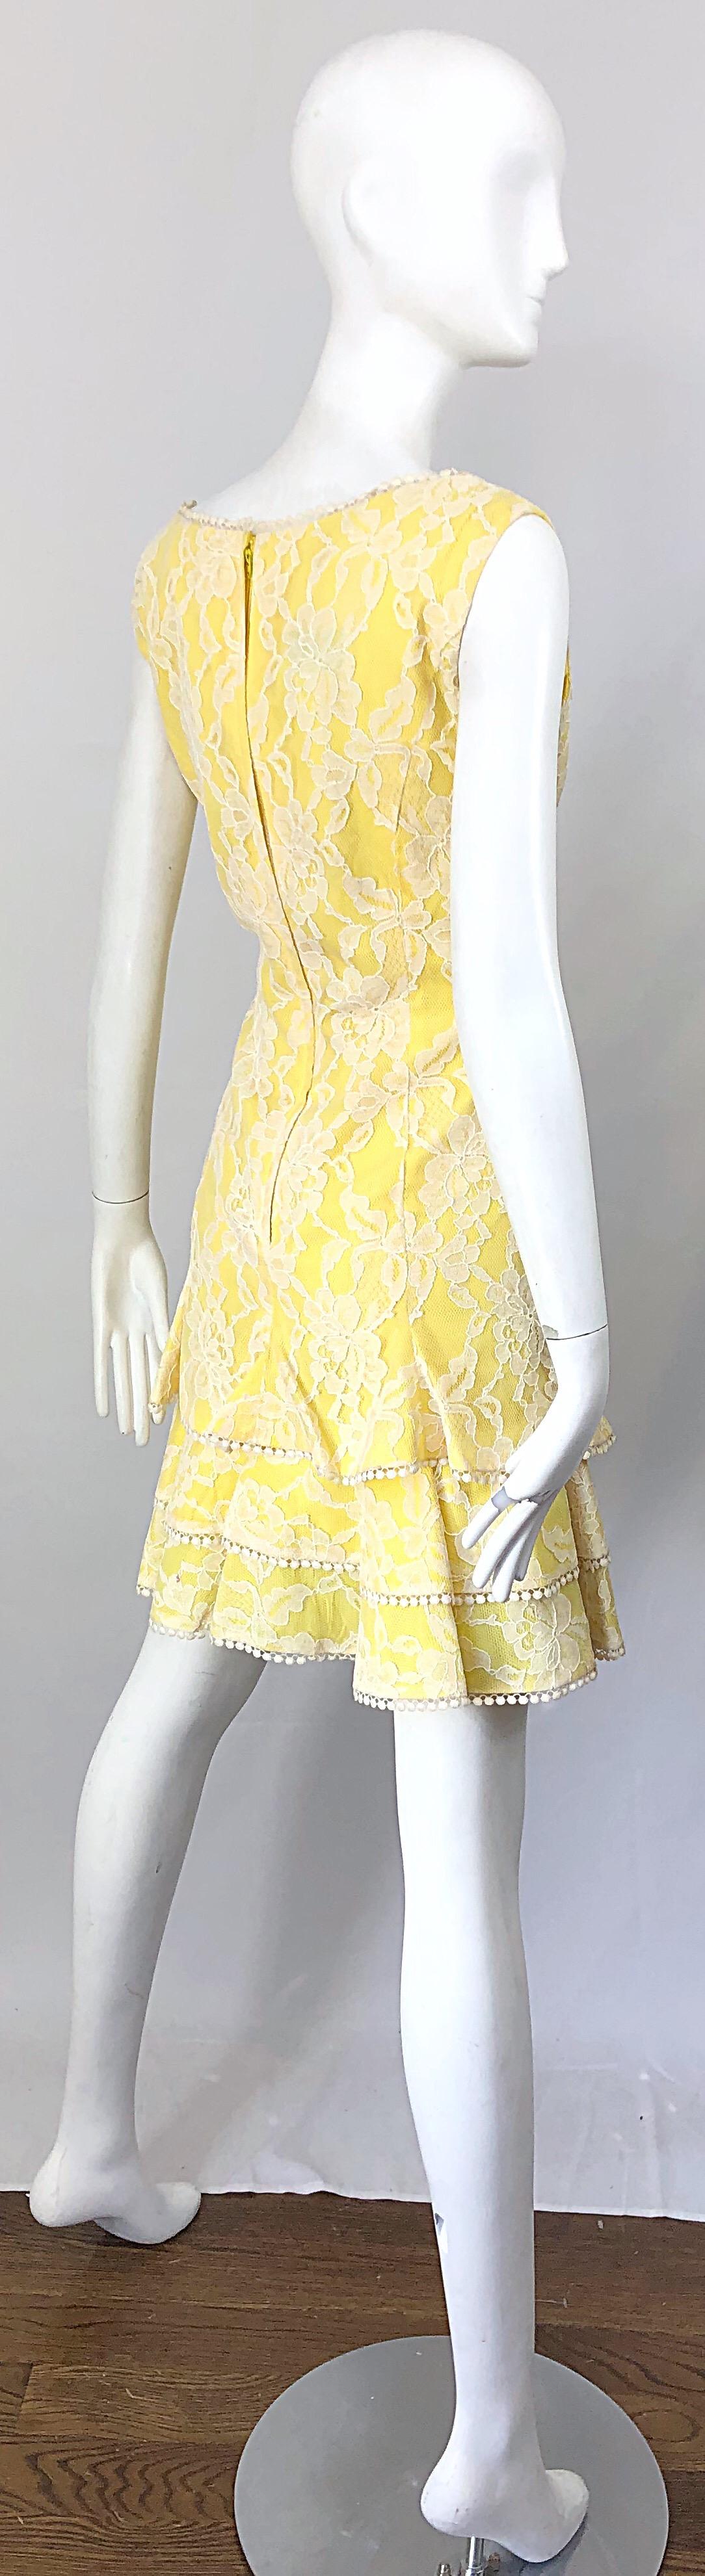 yellow and white lace dress